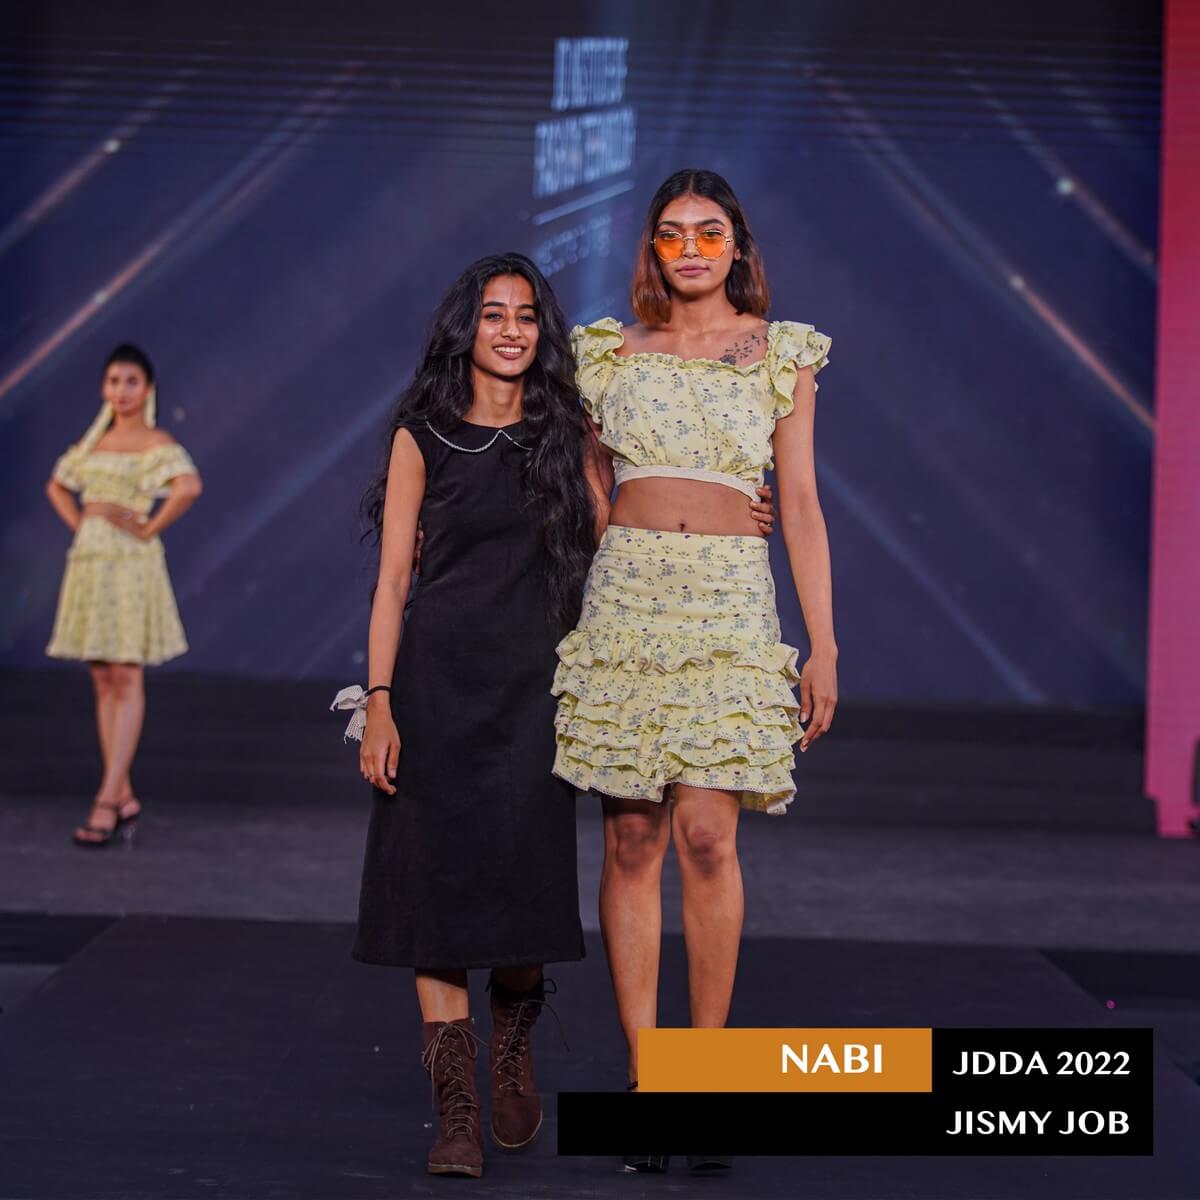 Nabi – Sync JD Design Awards Academy of Design and Management